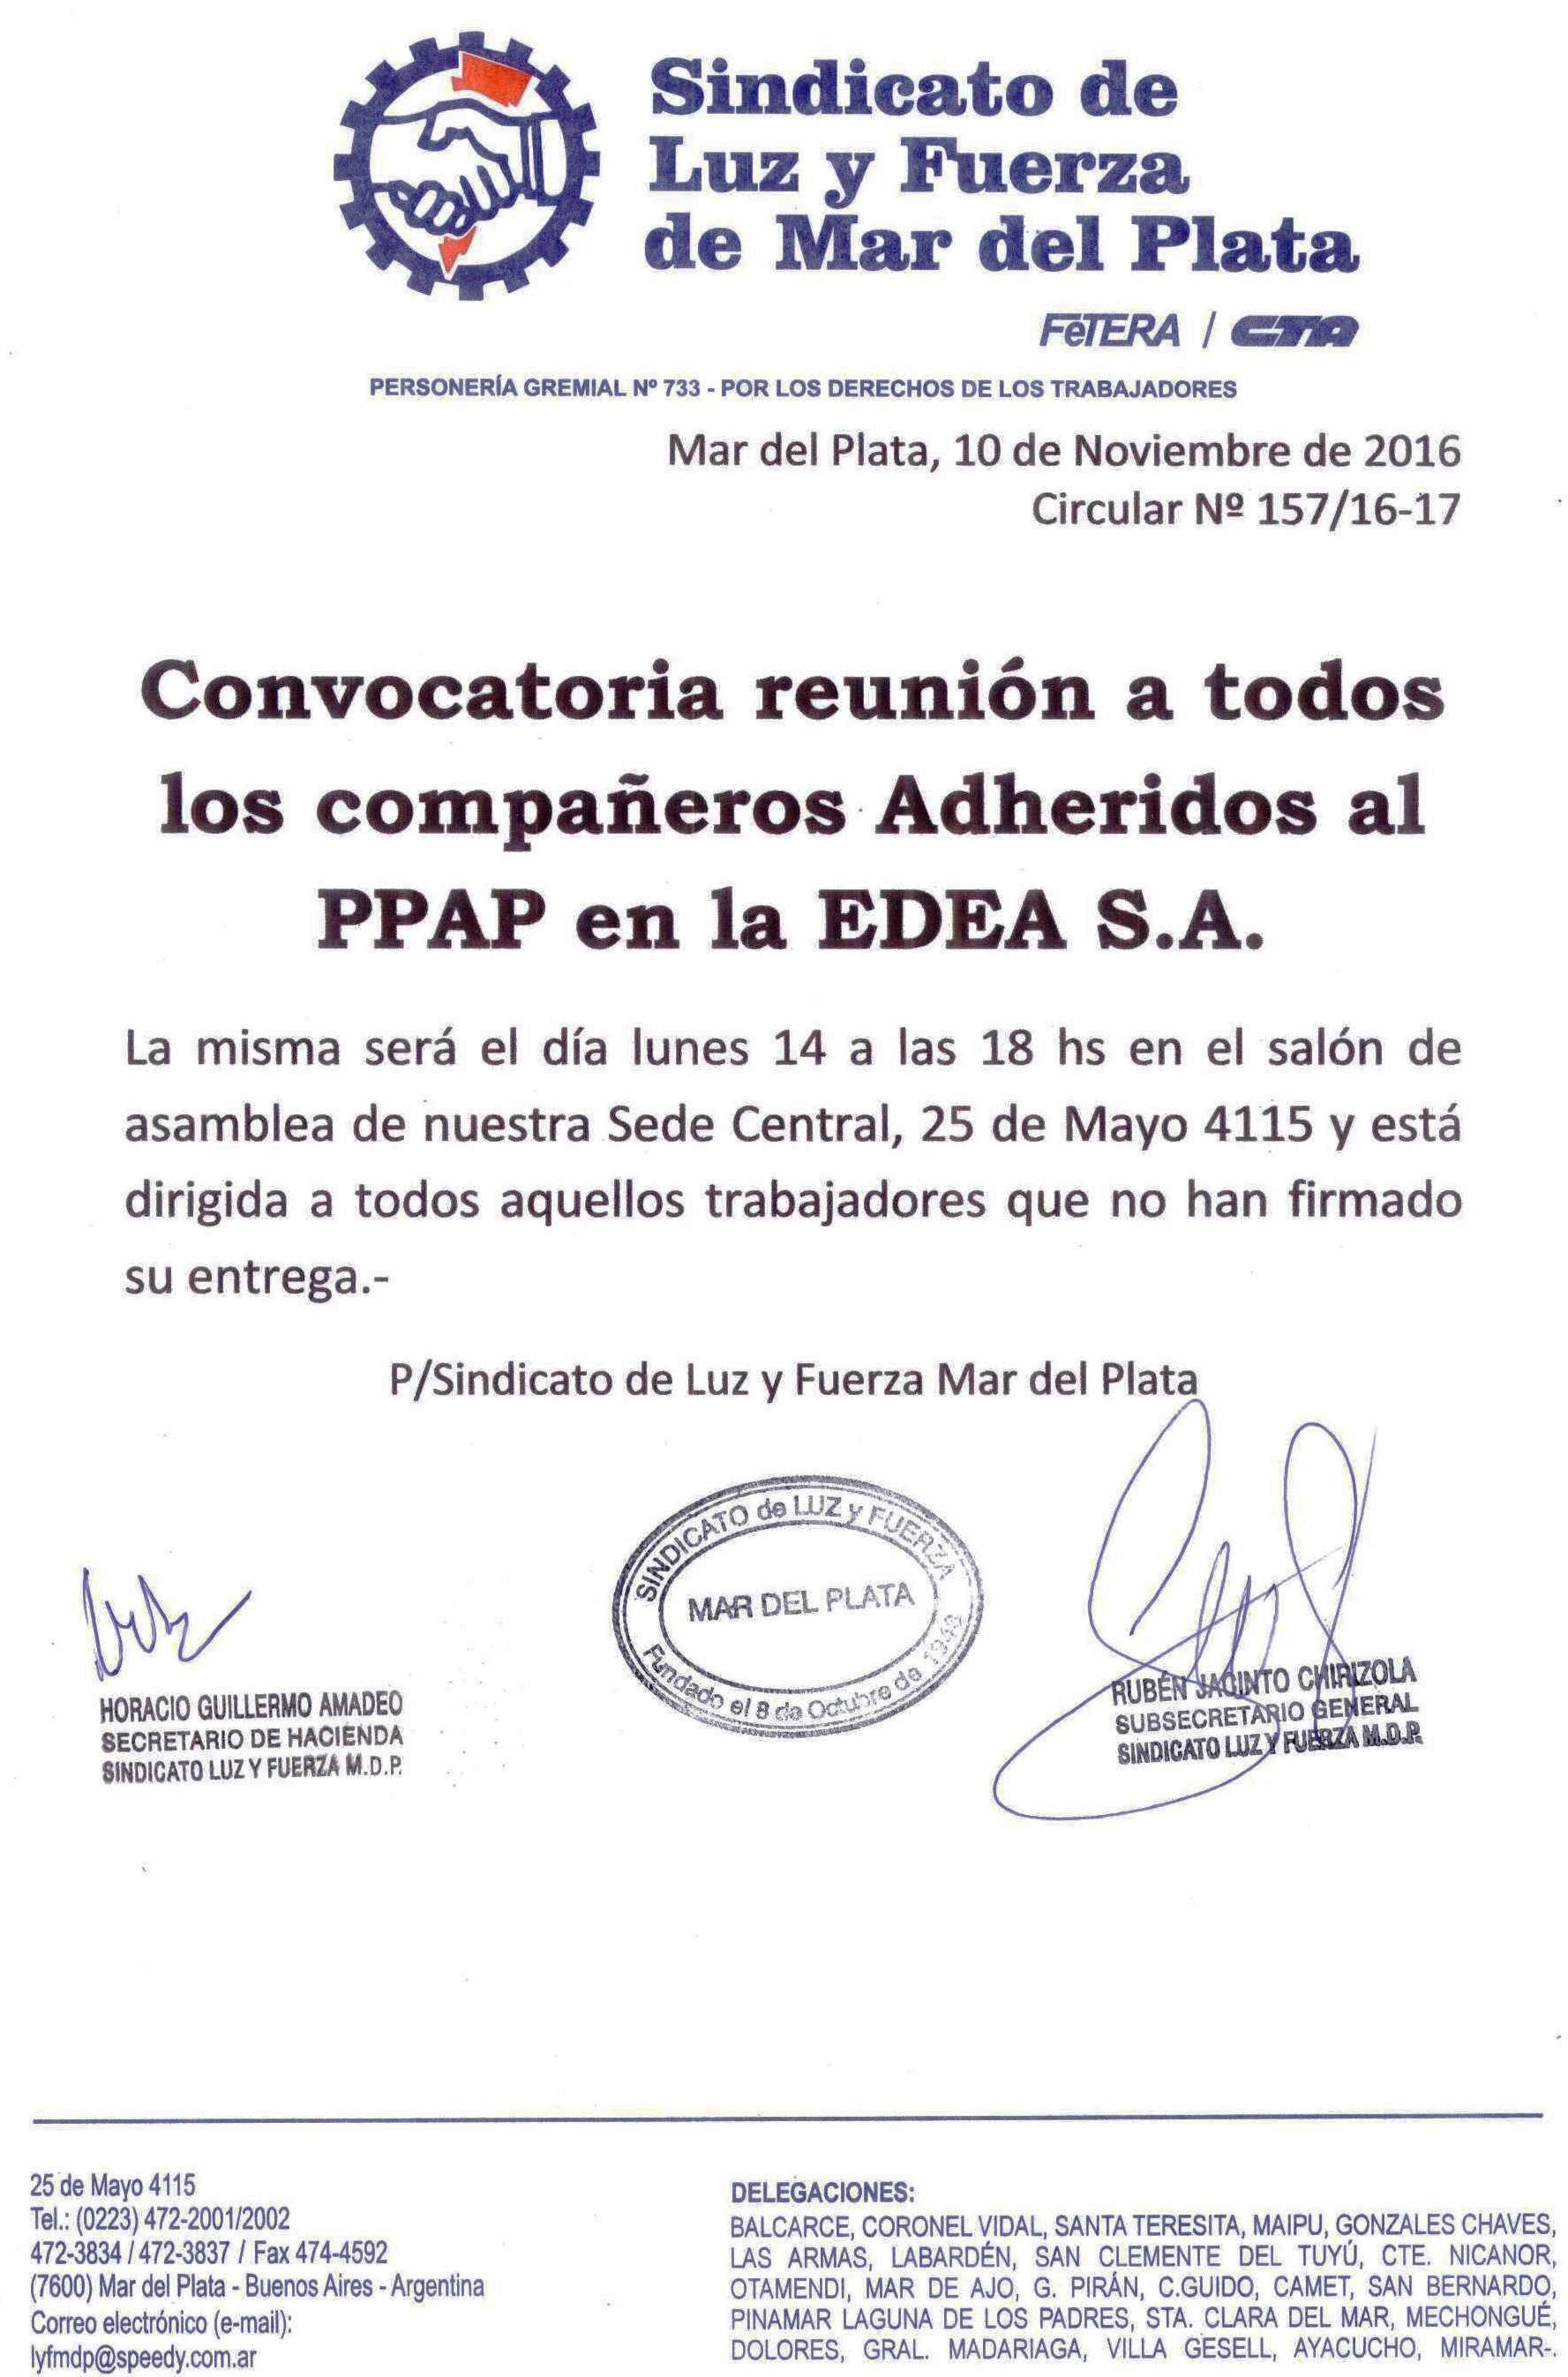 CONVOCATORIA A COMPAÑEROS ADHERIDOS AL PPAP DE EDEA S.A.